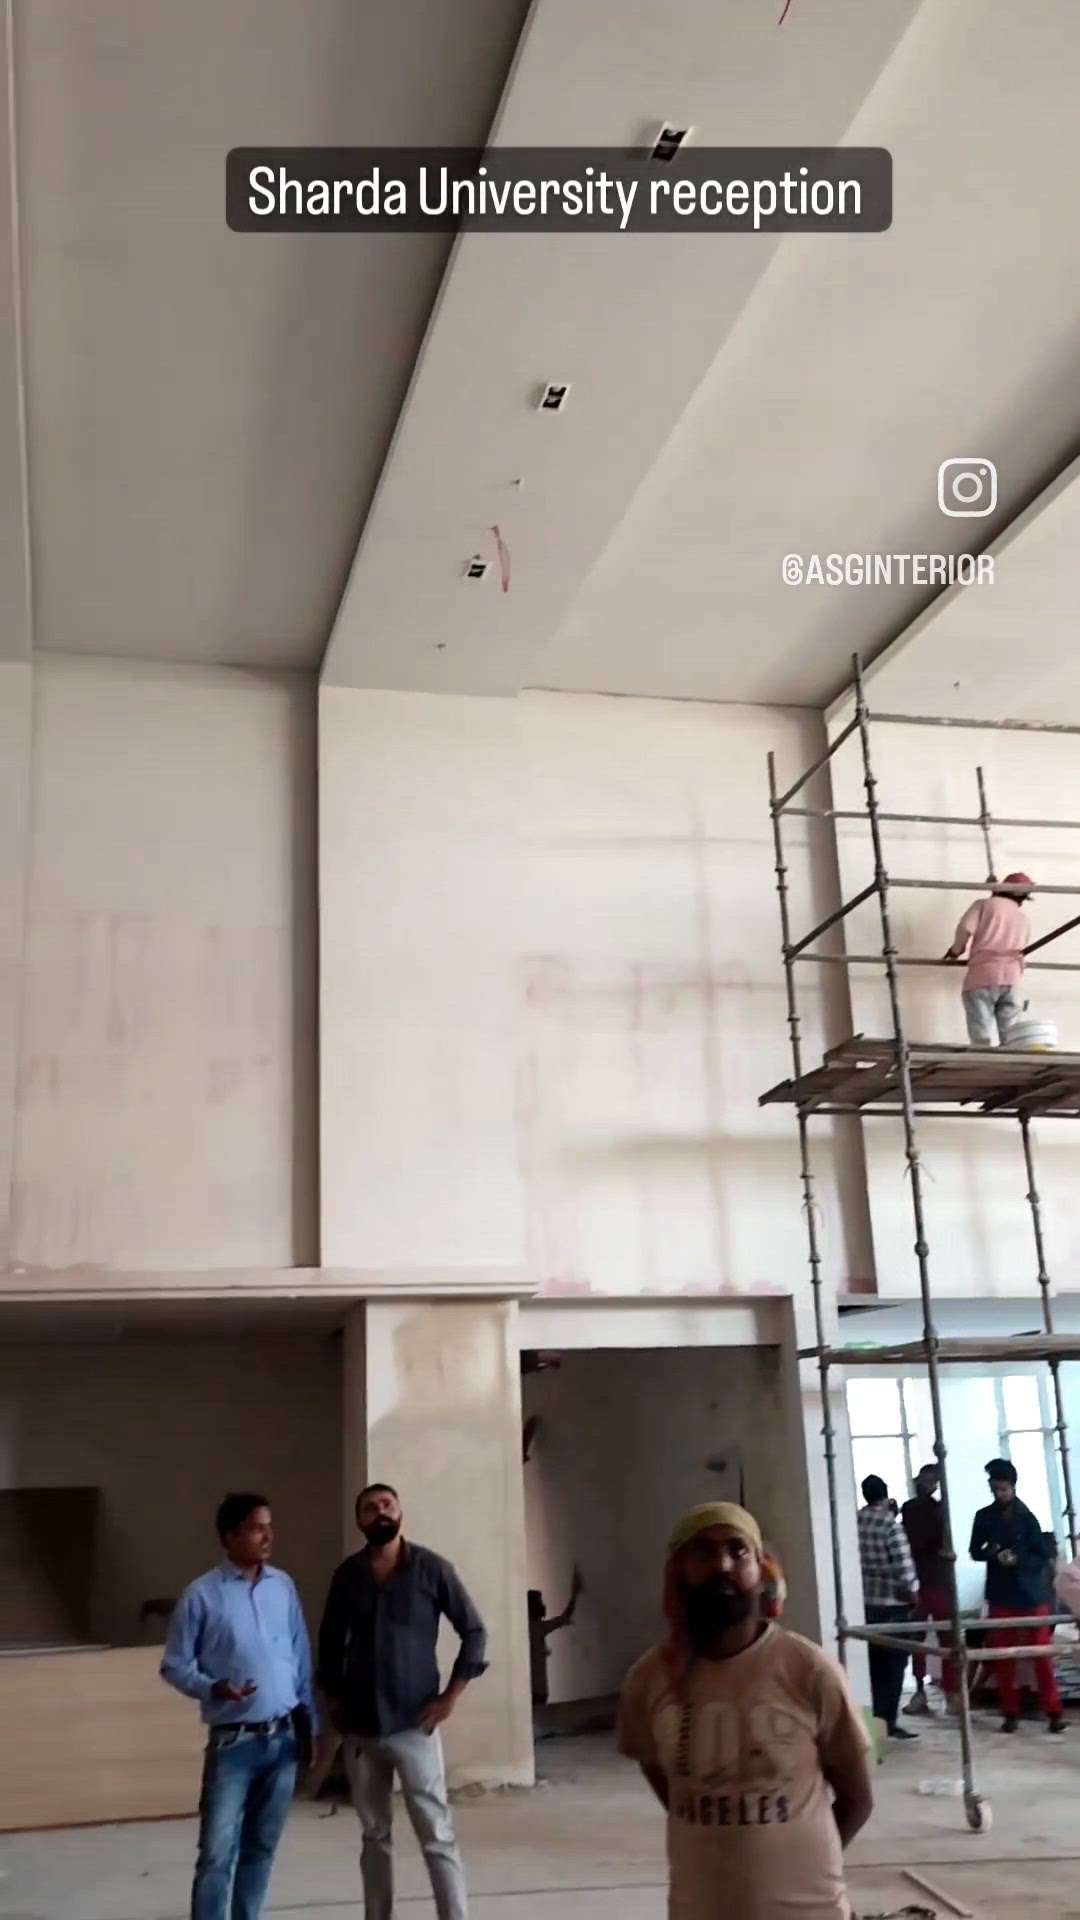 sharda University reception

#sharda #university  #Painter #WallPainting  #ceilingpaint